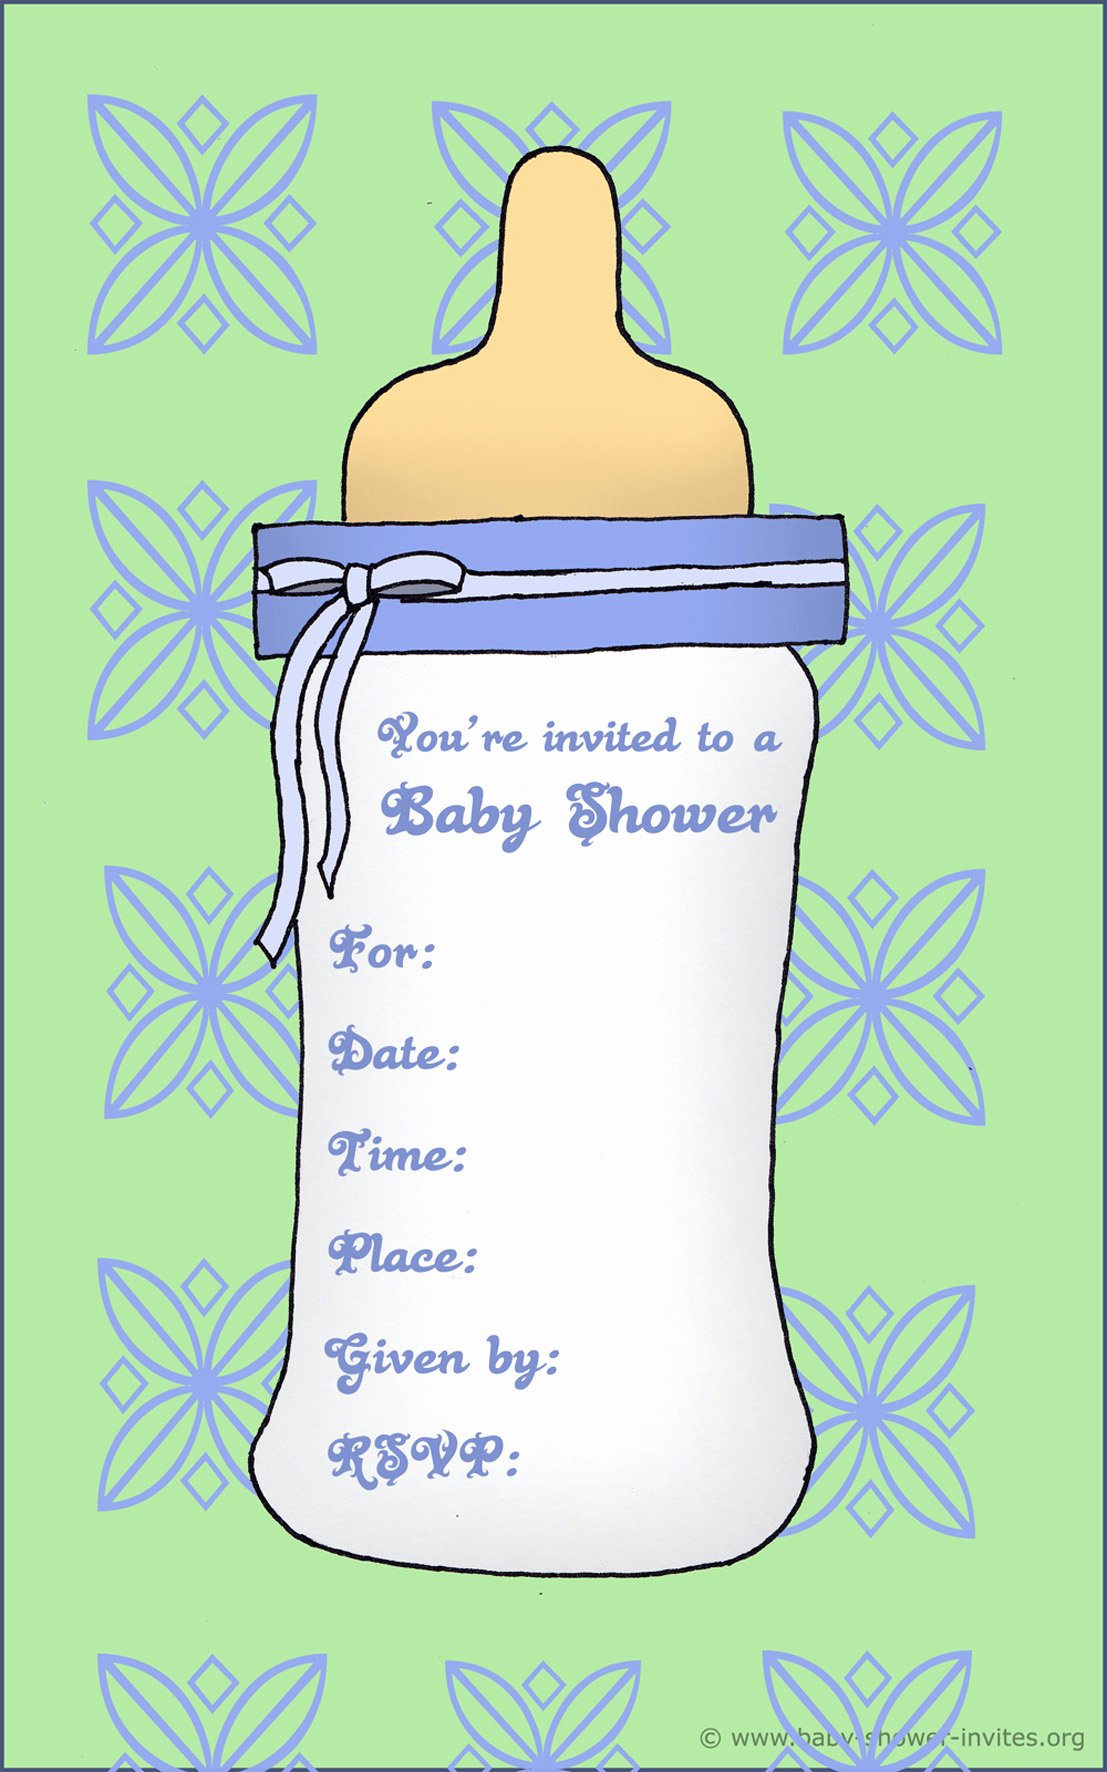 Baby Shower Invitations Templates Editable Awesome Free Baby Shower Invitation Templates